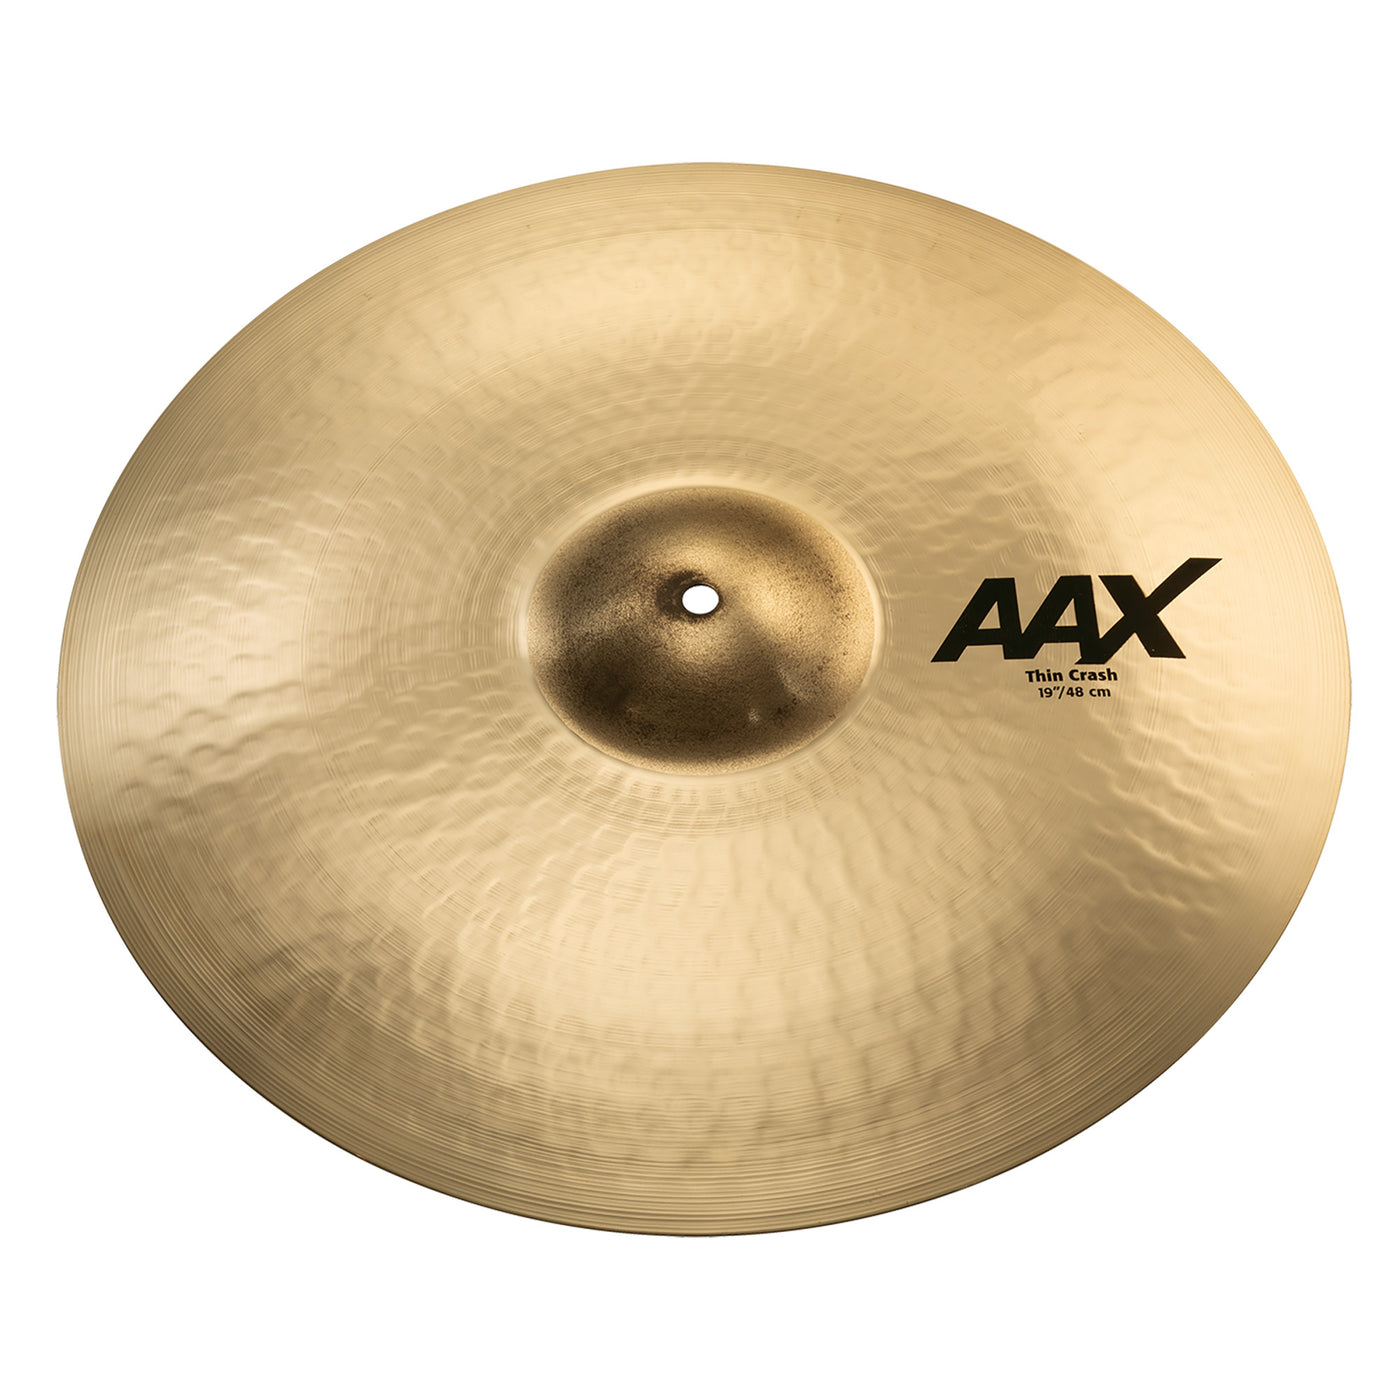 Sabian 19" AAX Thin Crash Cymbal - Brilliant Finish